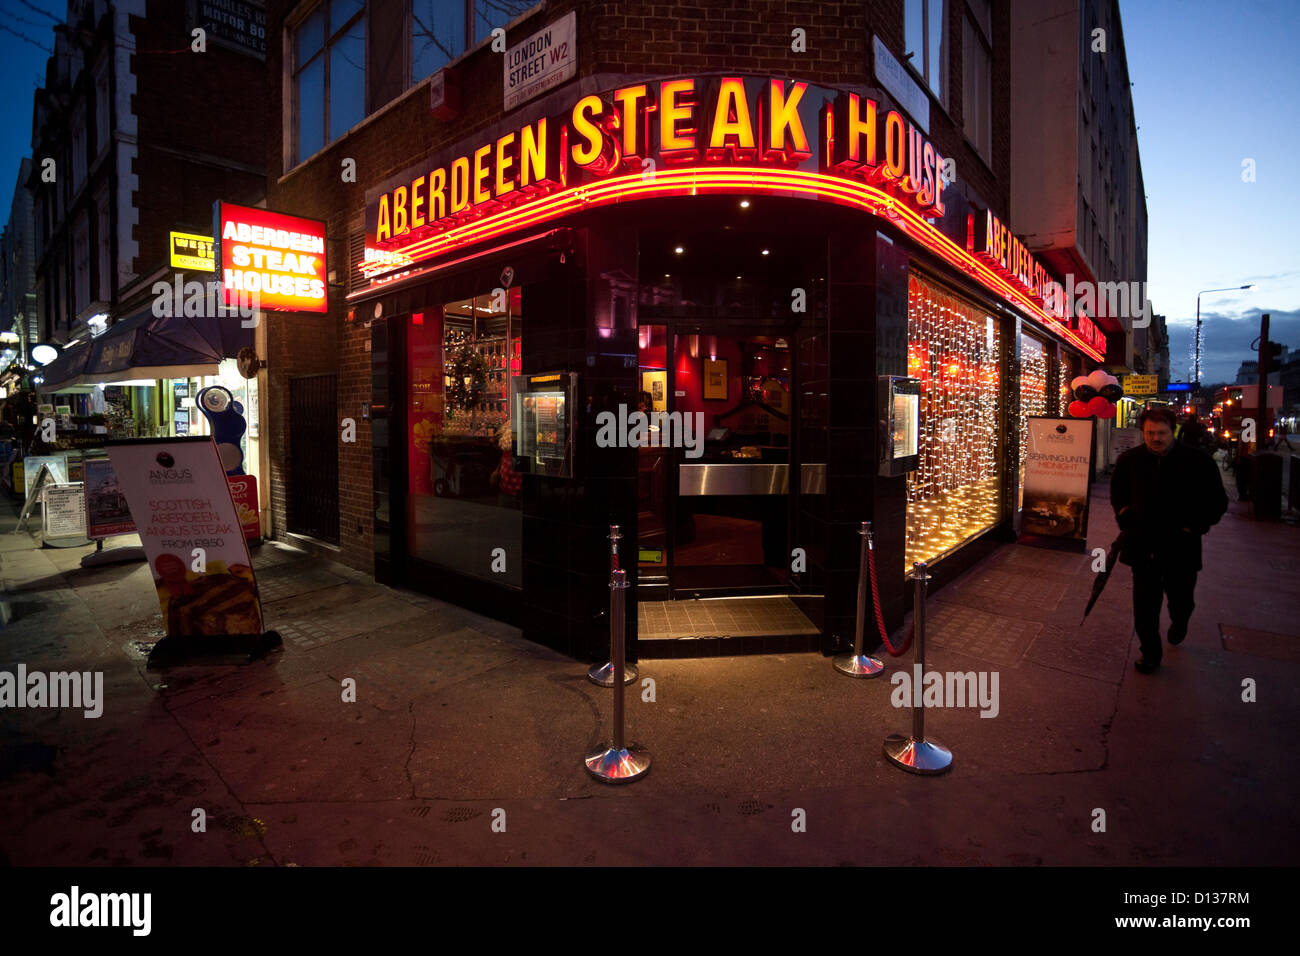 Aberdeen Steak House Restaurant on Praed Street, Paddington, Londra, Inghilterra, Regno Unito. Foto Stock